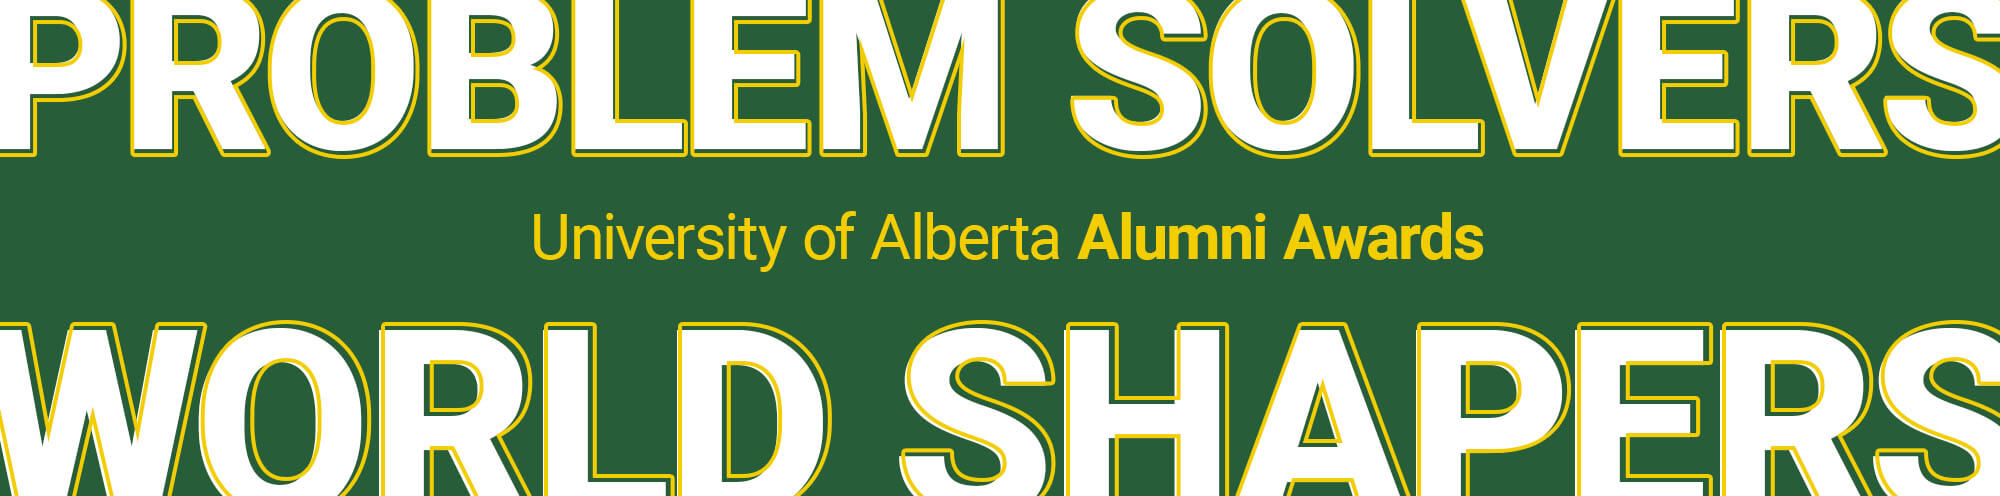 University of Alberta Alumni Awards: Problem sovlers, world shapers